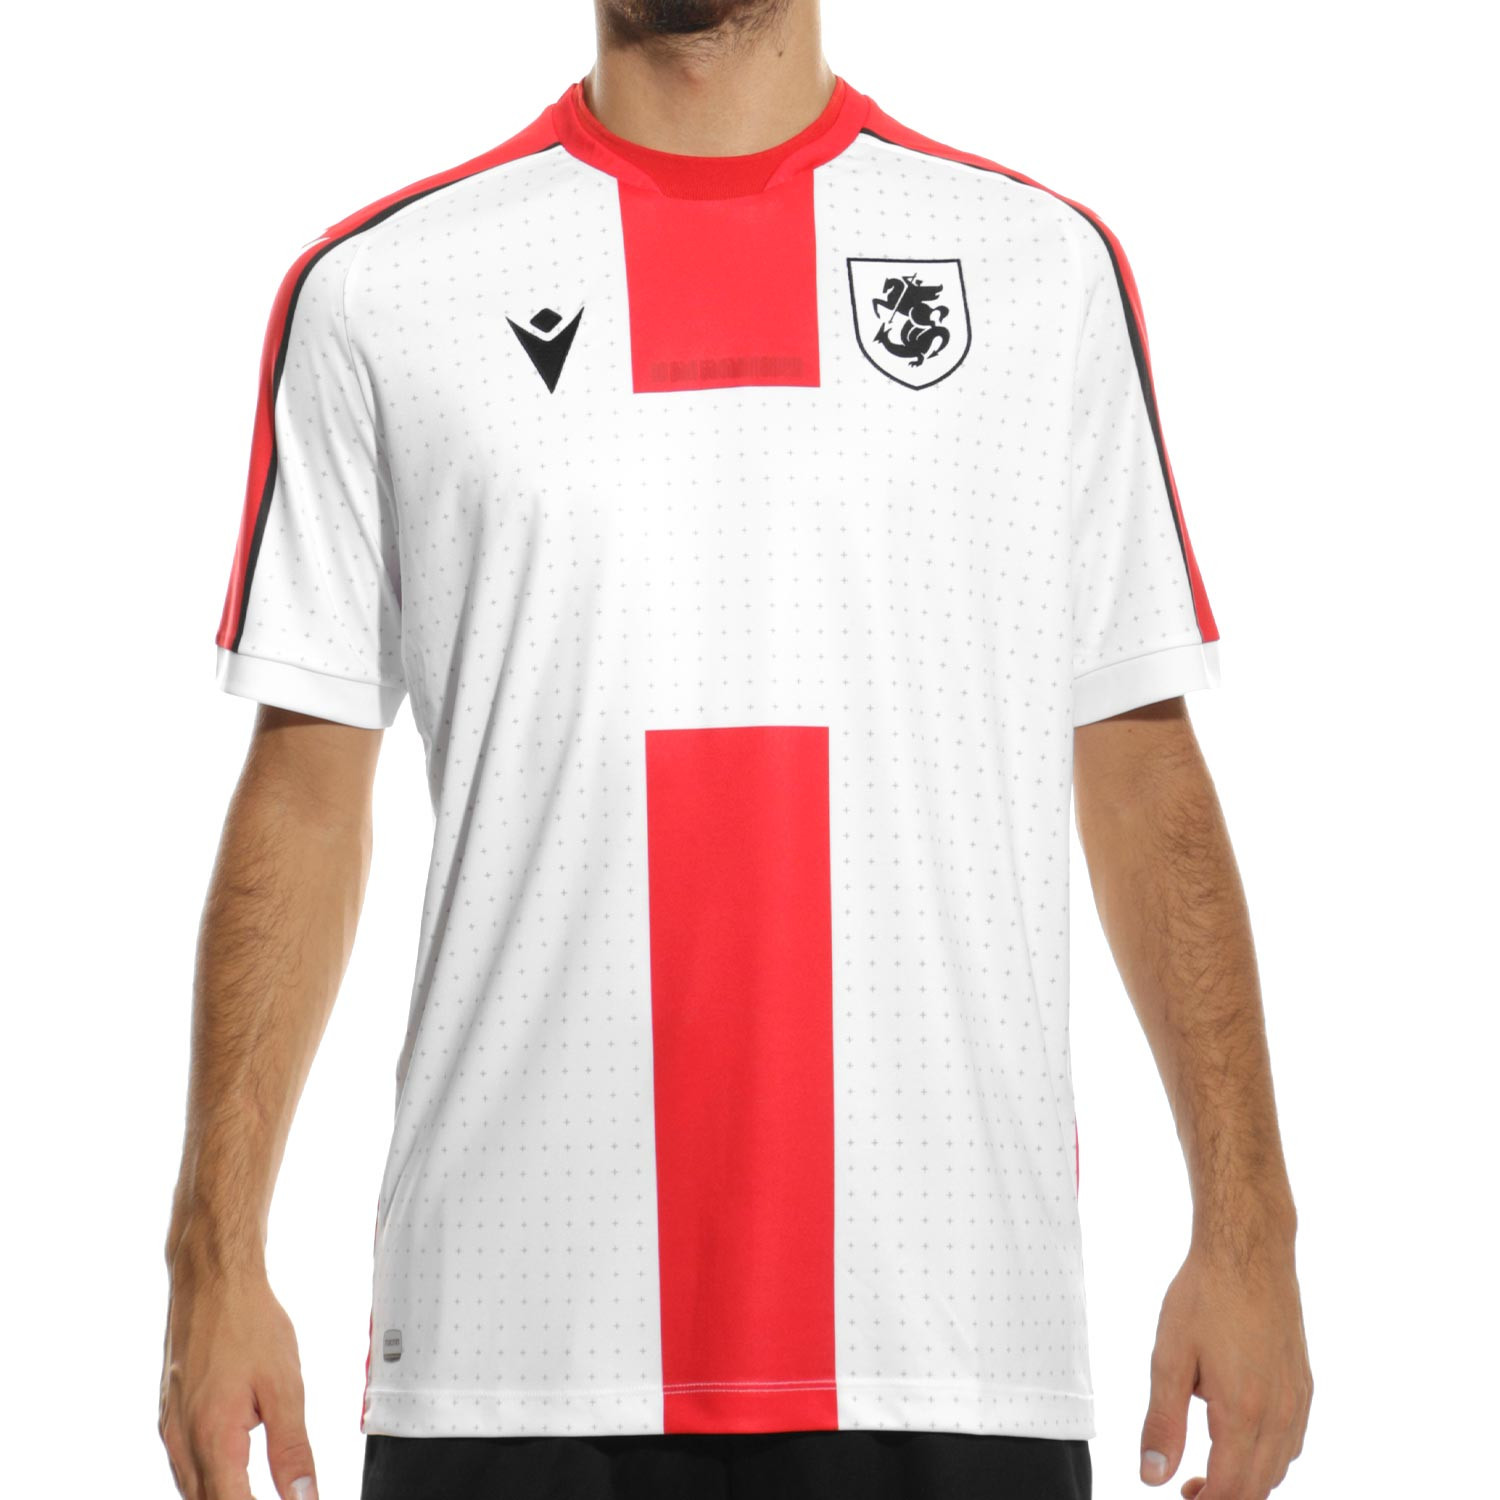 Kit, Camisetas y accesorios oficiales Fútbol Georgia